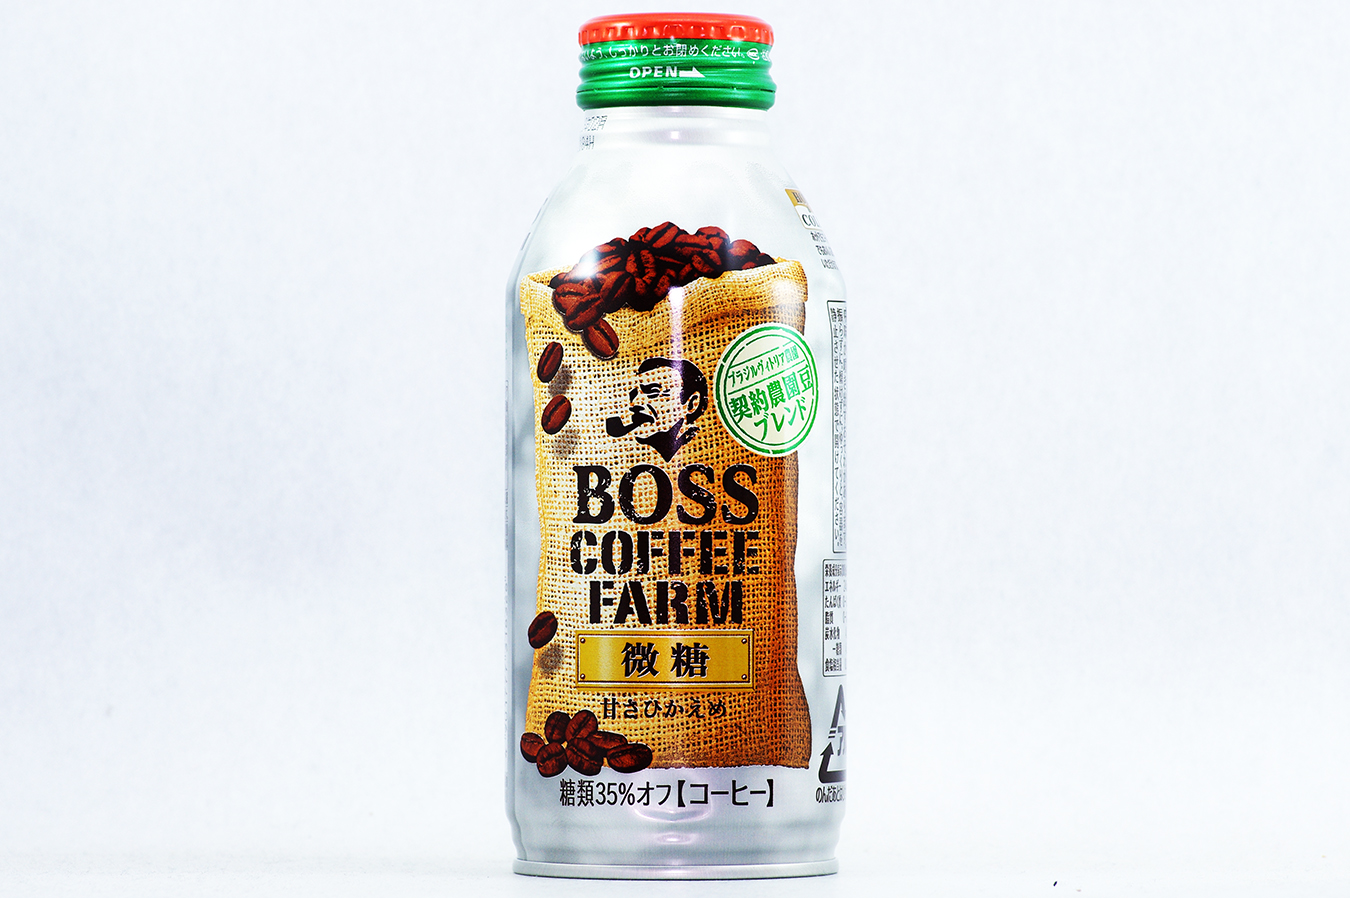 BOSS COFFEE FARM 微糖 契約農園豆ブレンド 370gボトル缶 2018年3月